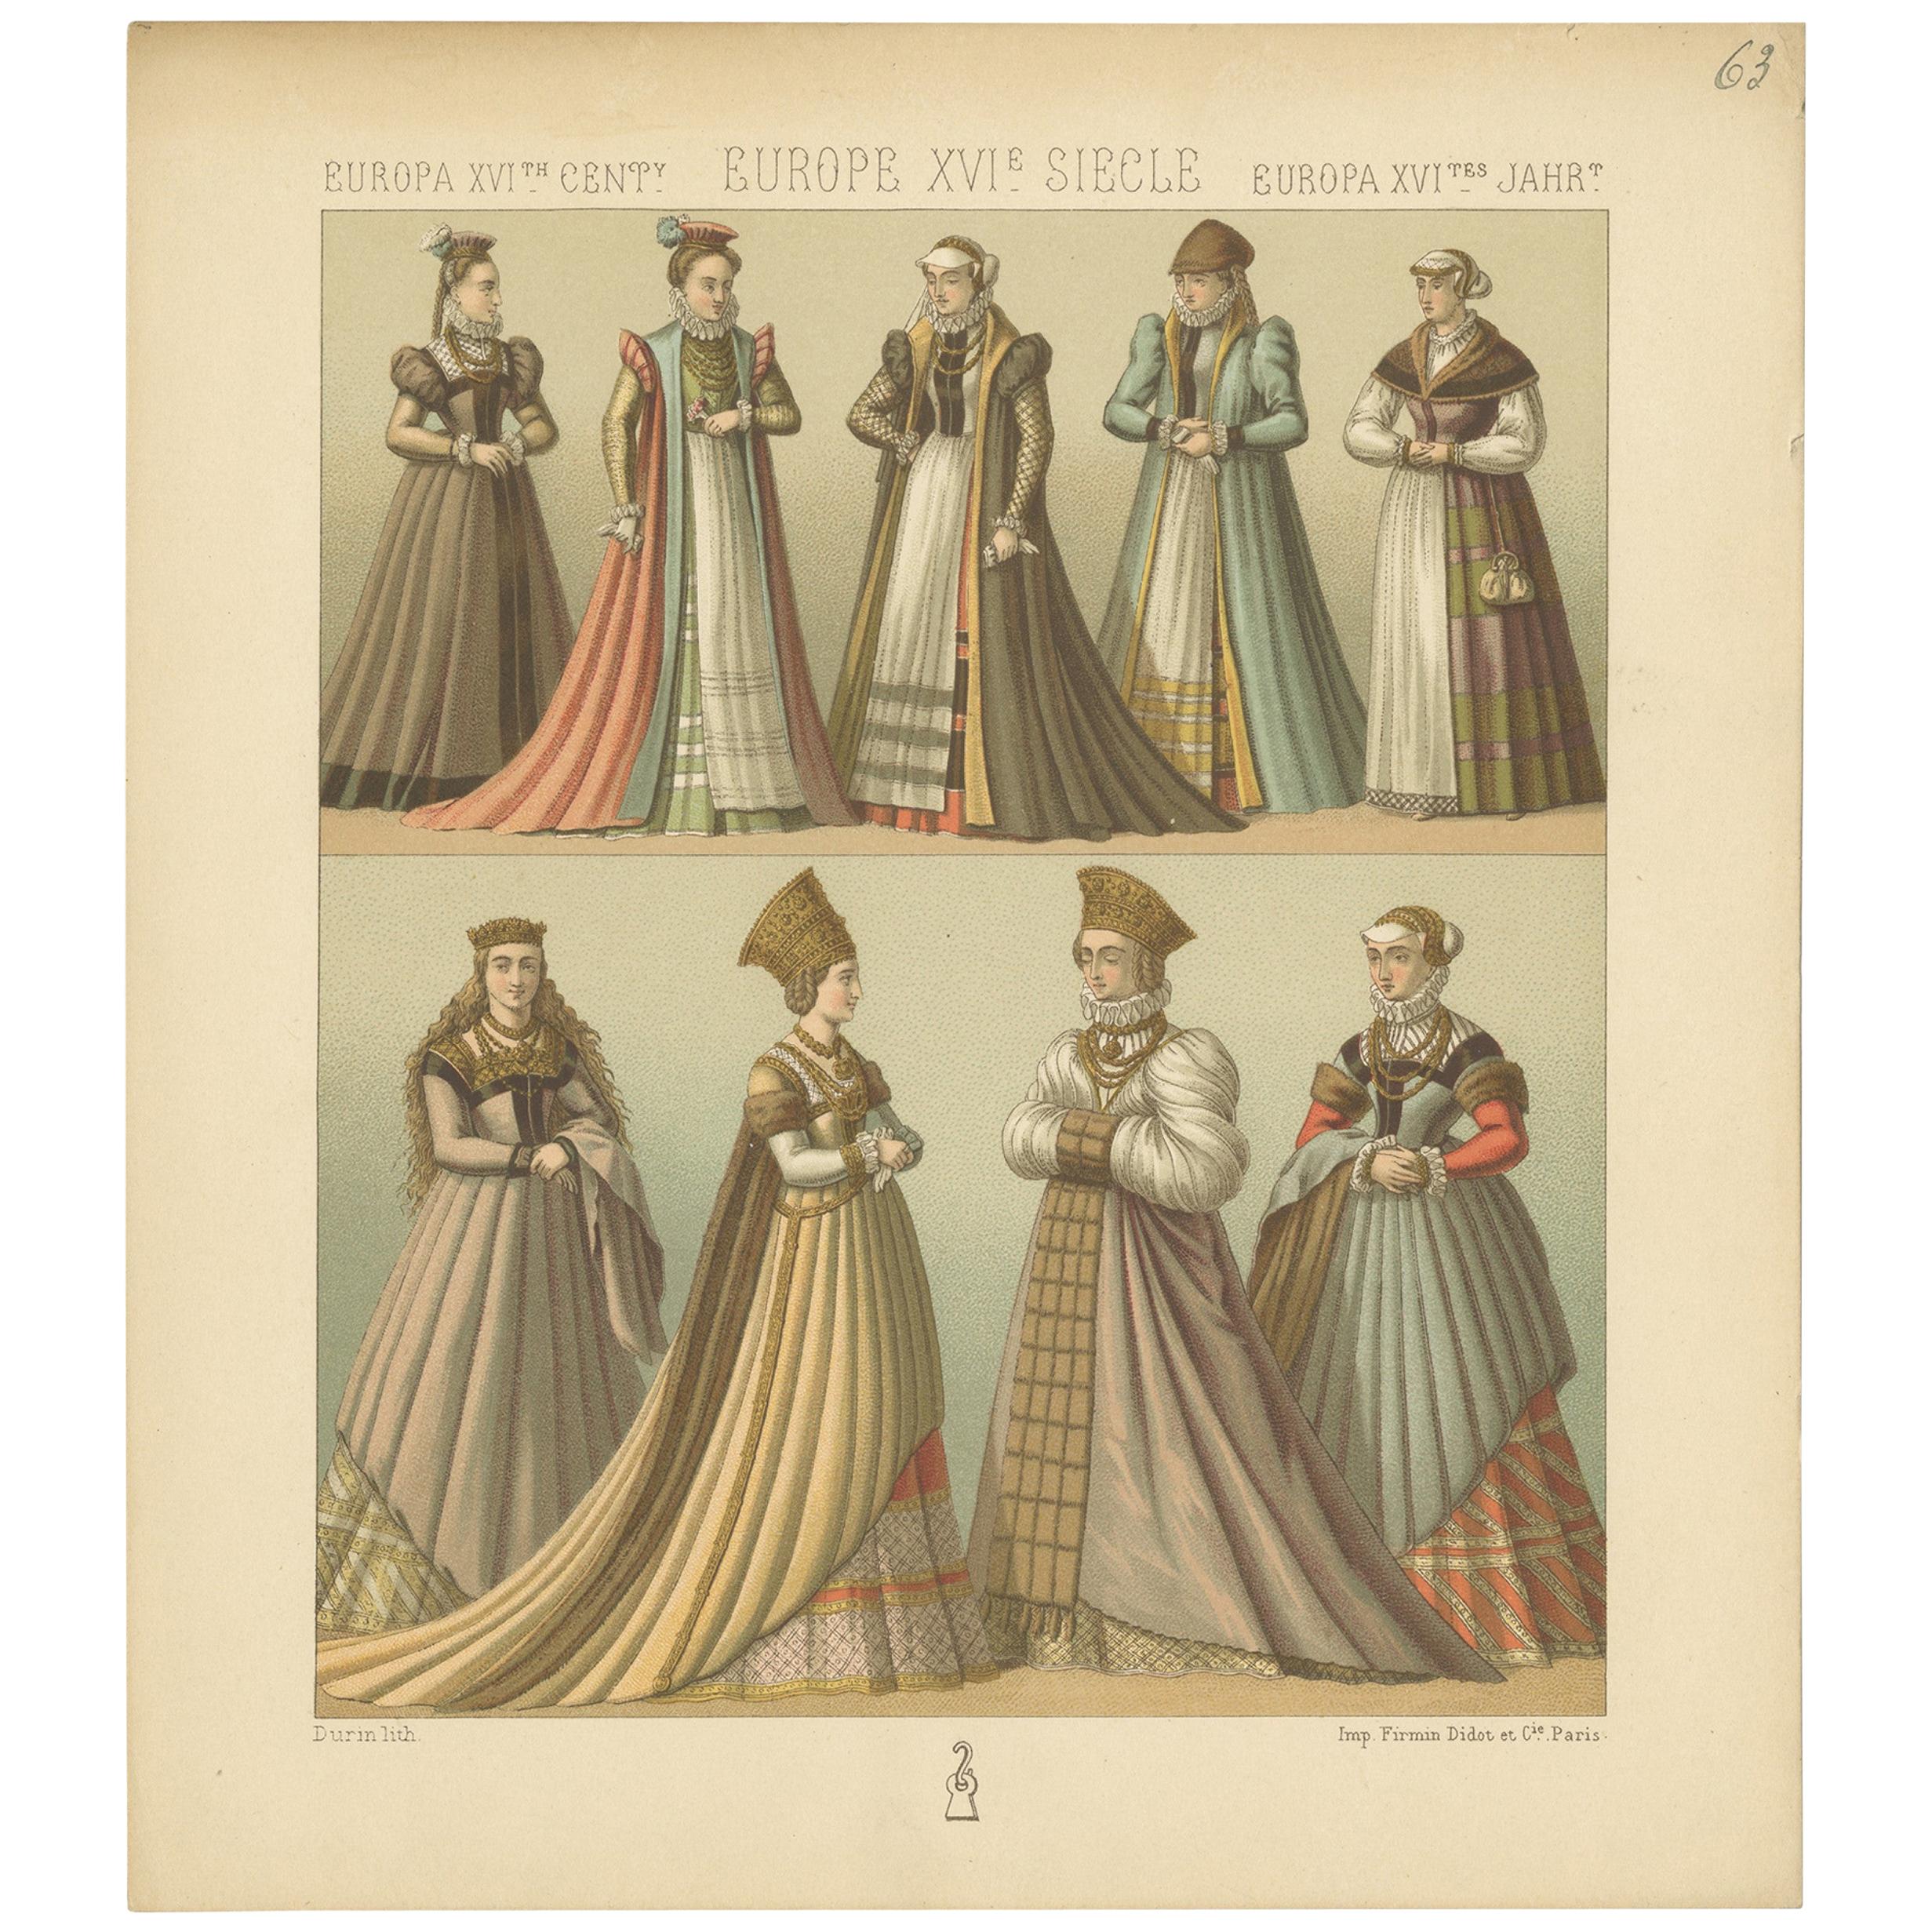 Pl. 63 Antique Print of European 16th Century Costumes by Racinet, circa 1880